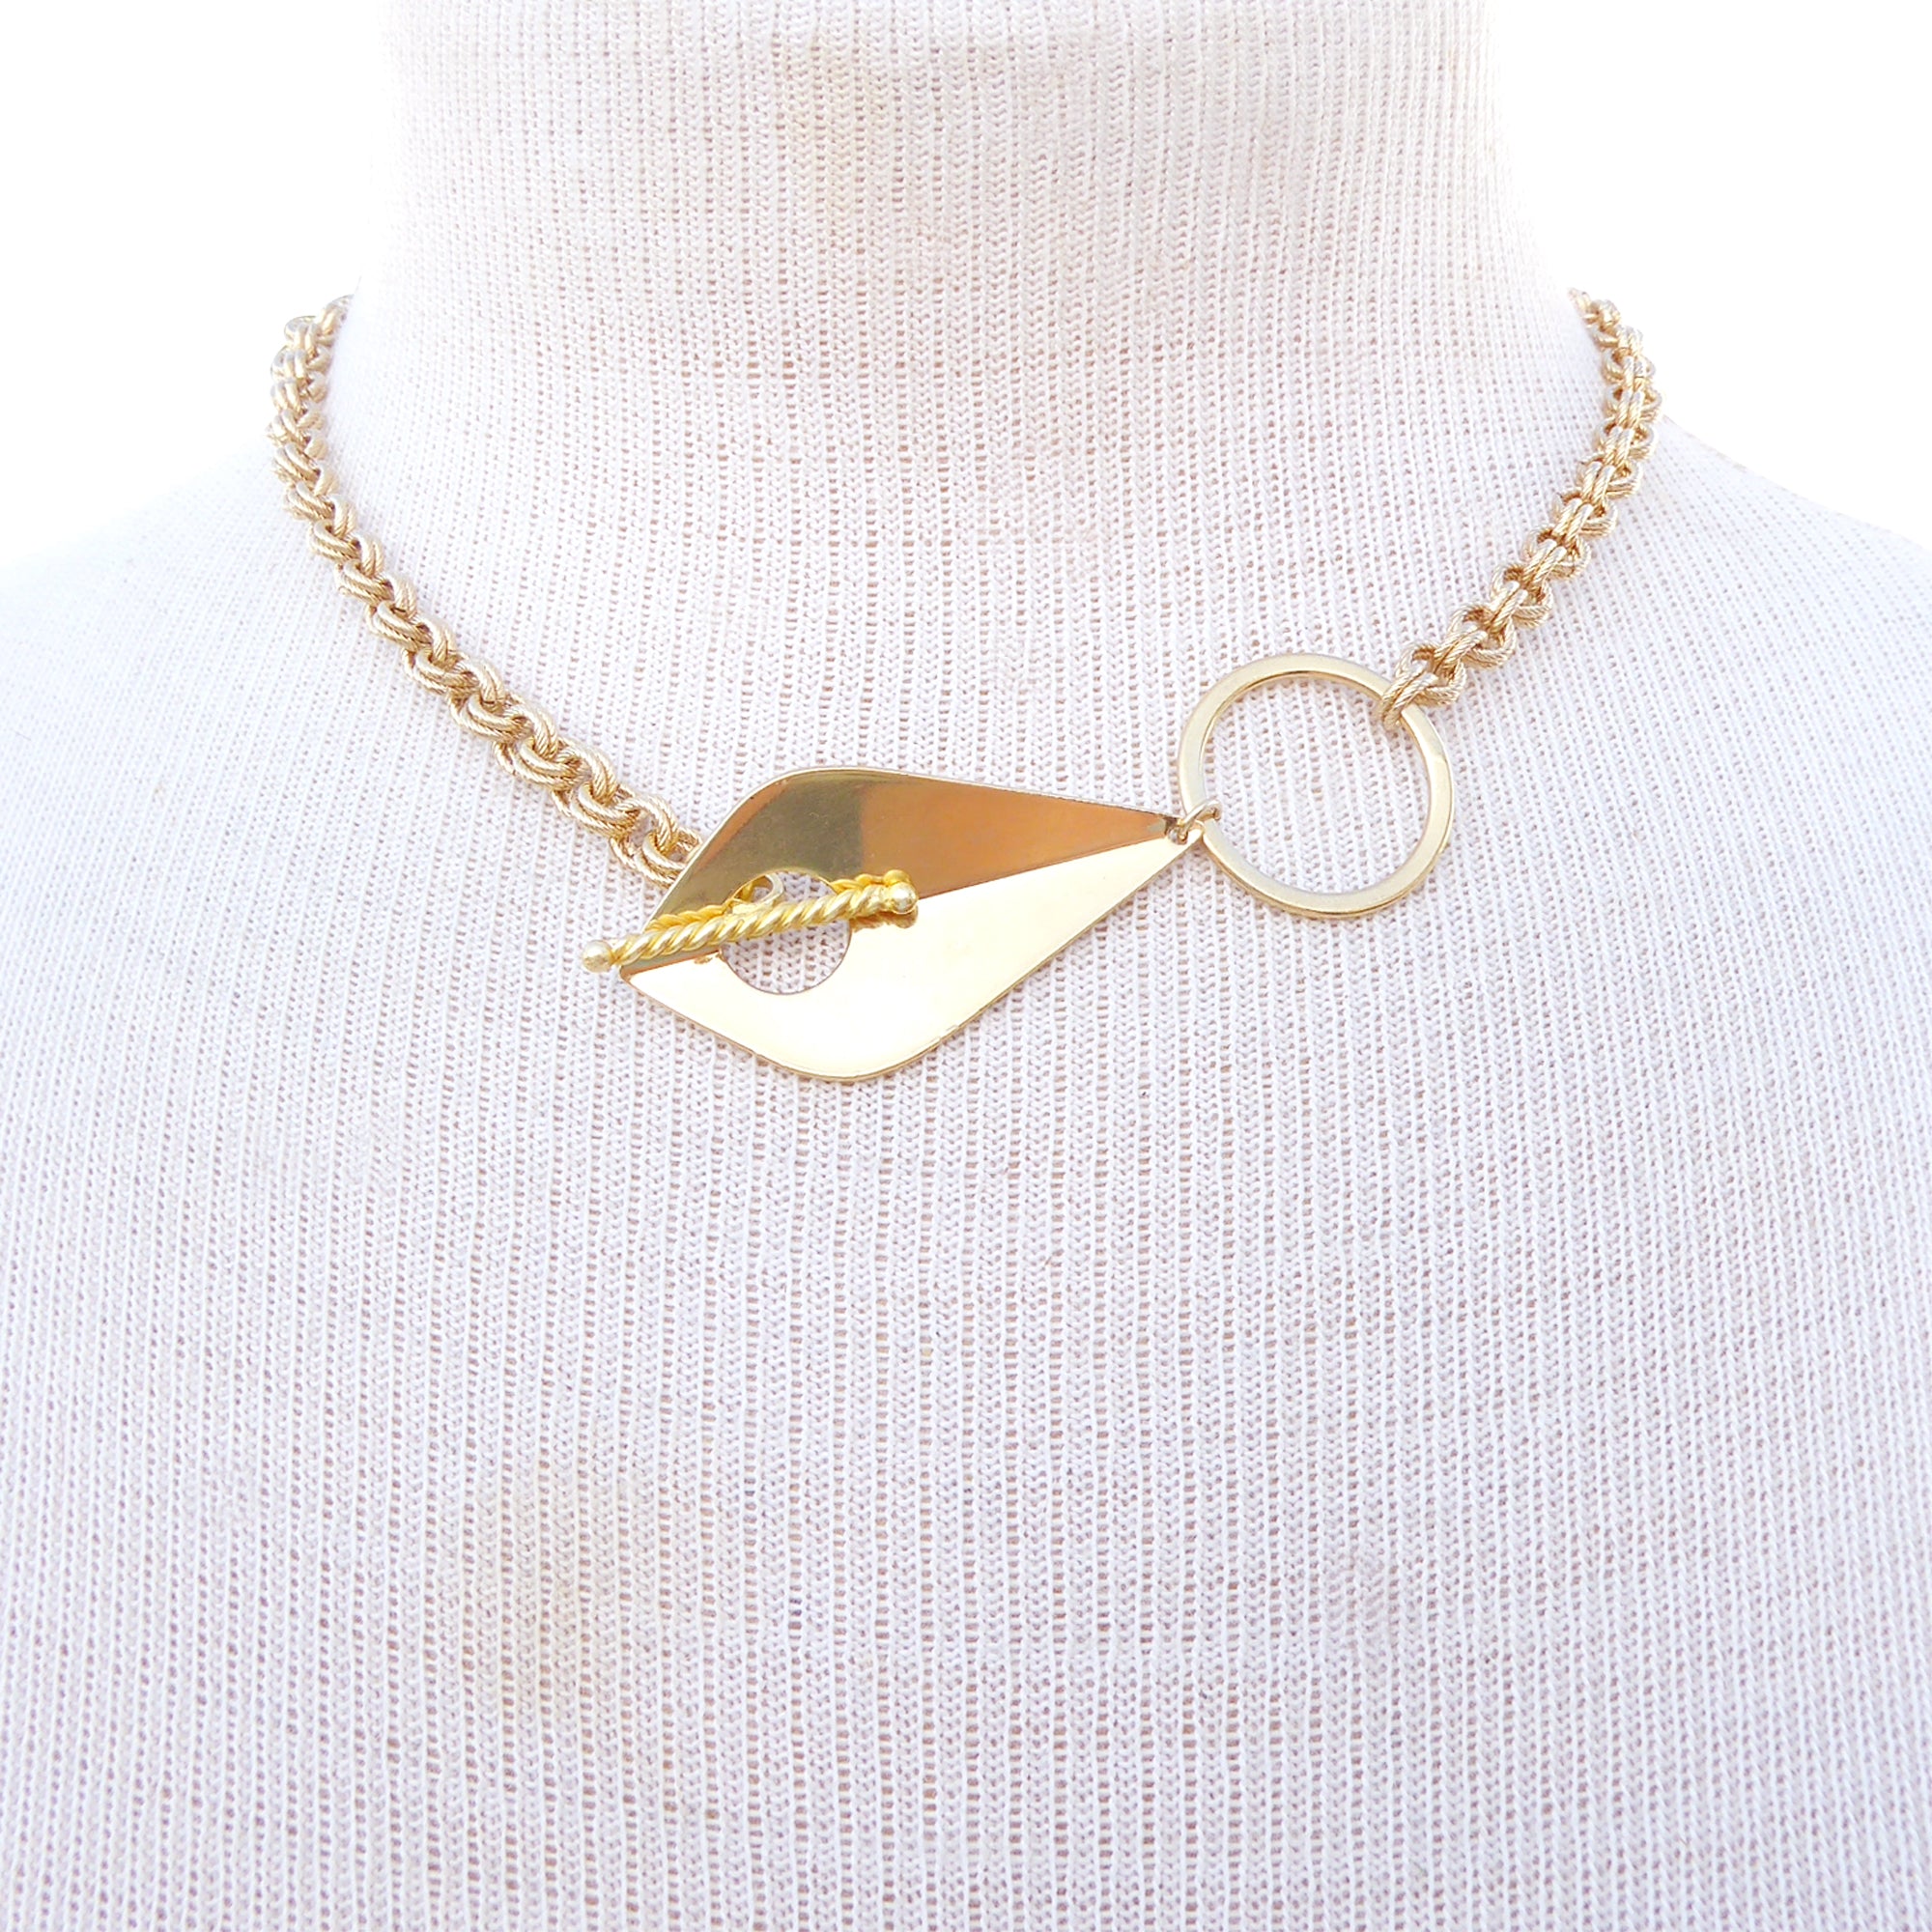 Gold leaf toggle necklace by Jenny Dayco 7